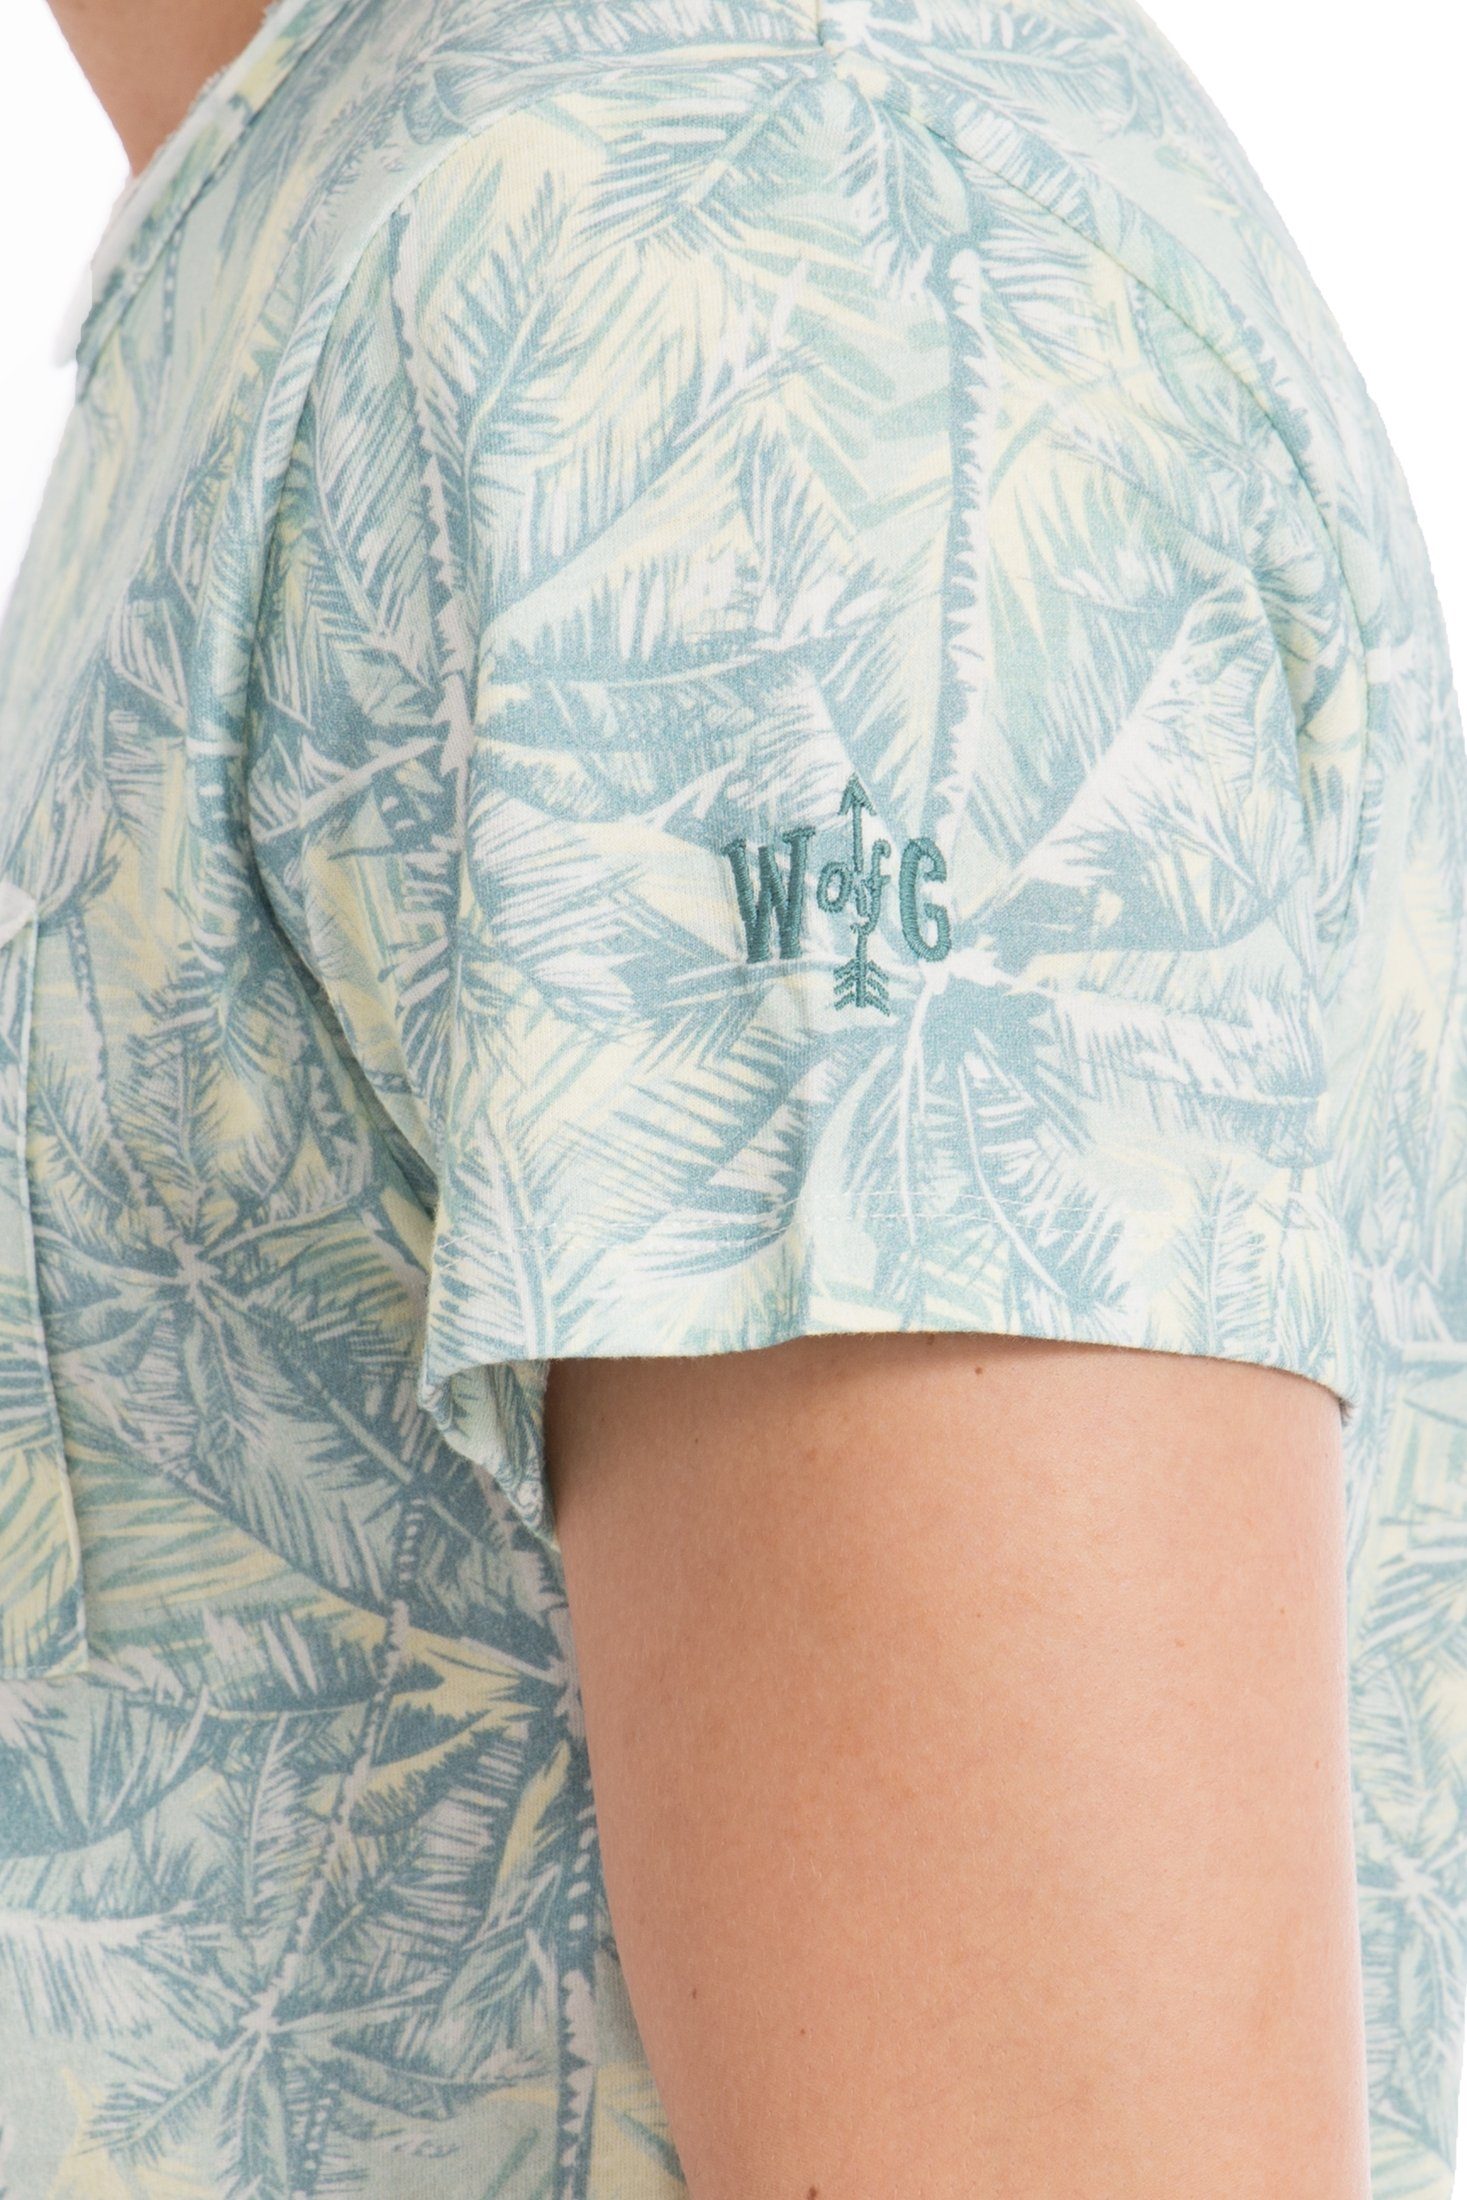 T-Shirt Tasche Tropical & Way Glory Print grün of